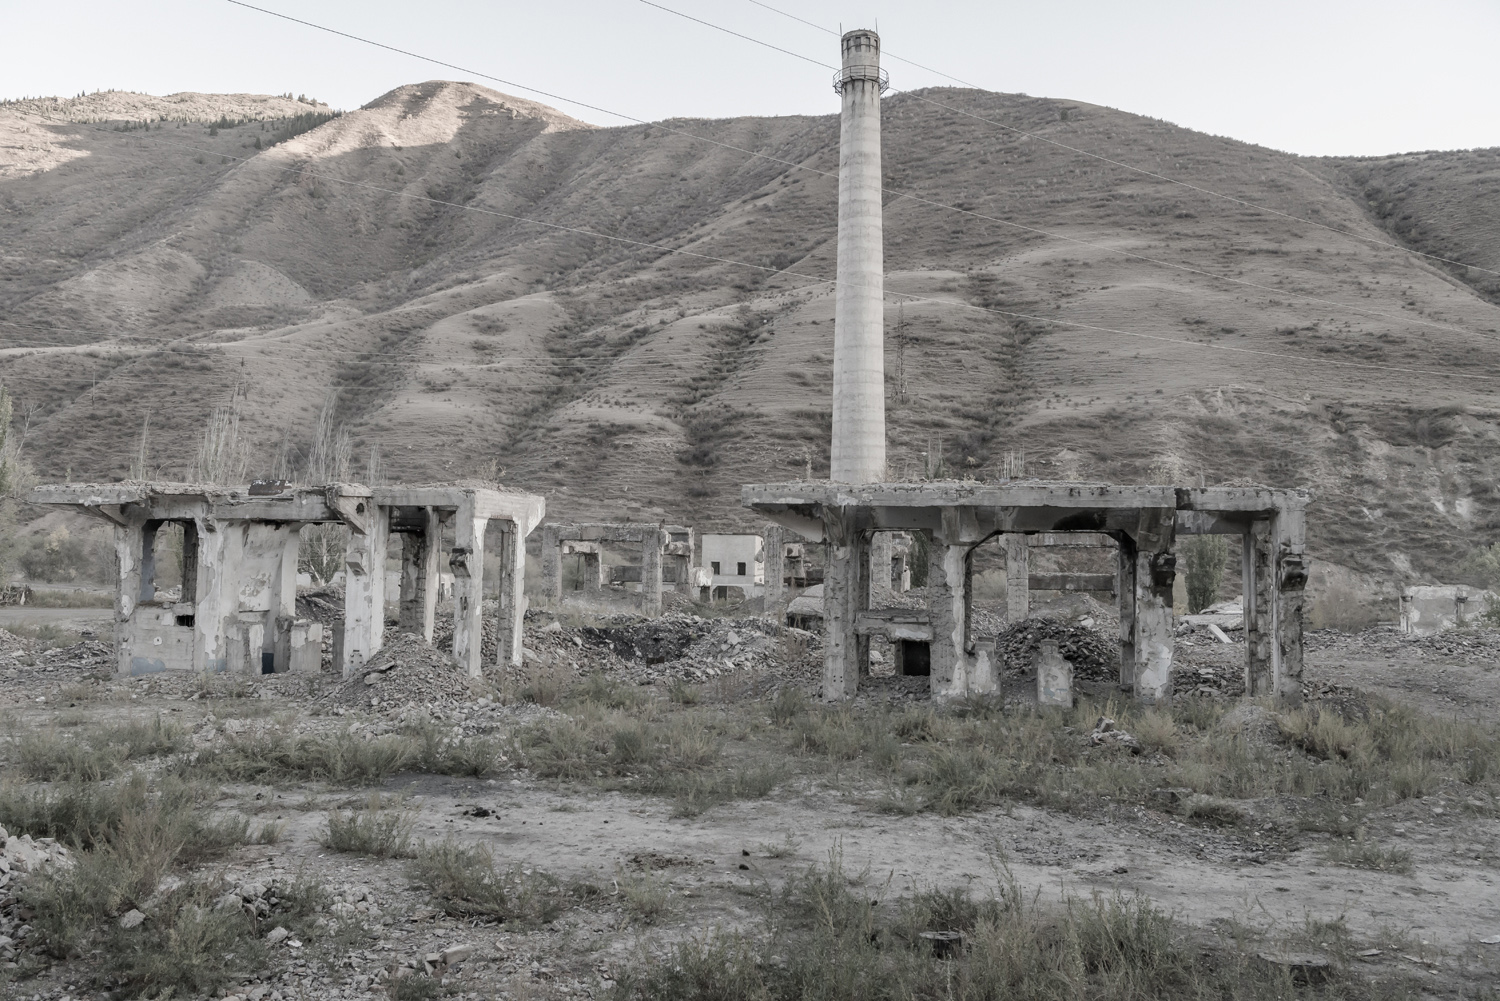 min-kush-soviet-uranium-mining-town-industrial-Russia-Kyrgyzstan-ruins-soviet-sign-jo-kearney-photos-video-photography-videographer.jpg